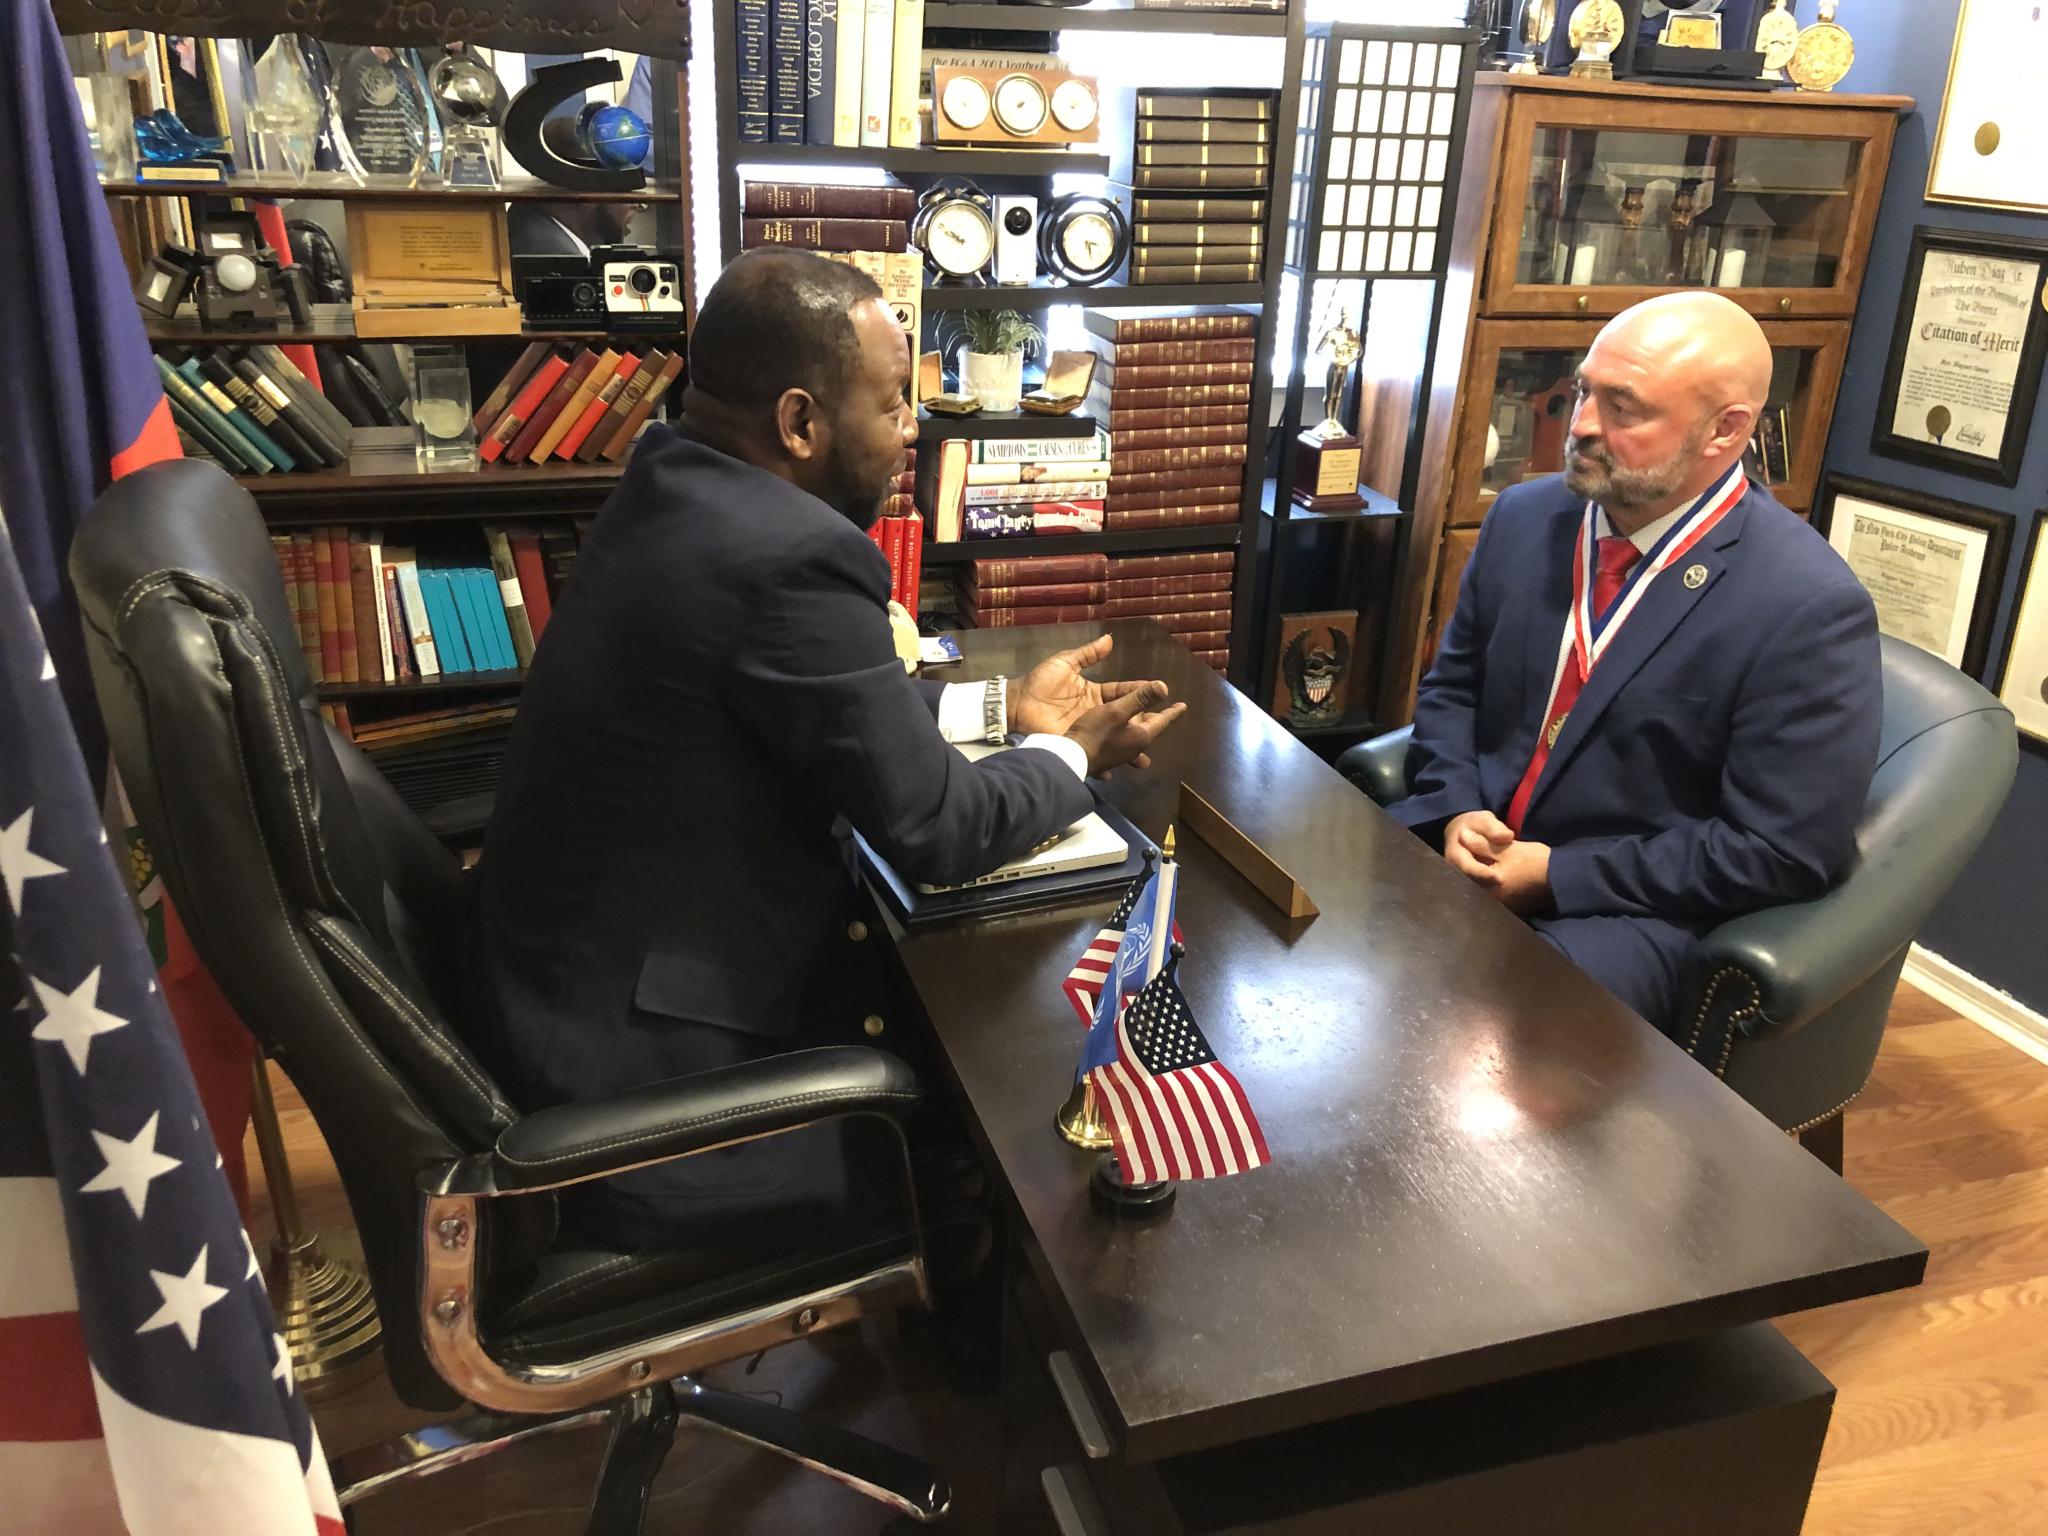 County Executive Wendel Meets With UN Ambassador Living In Jamestown, N.Y.